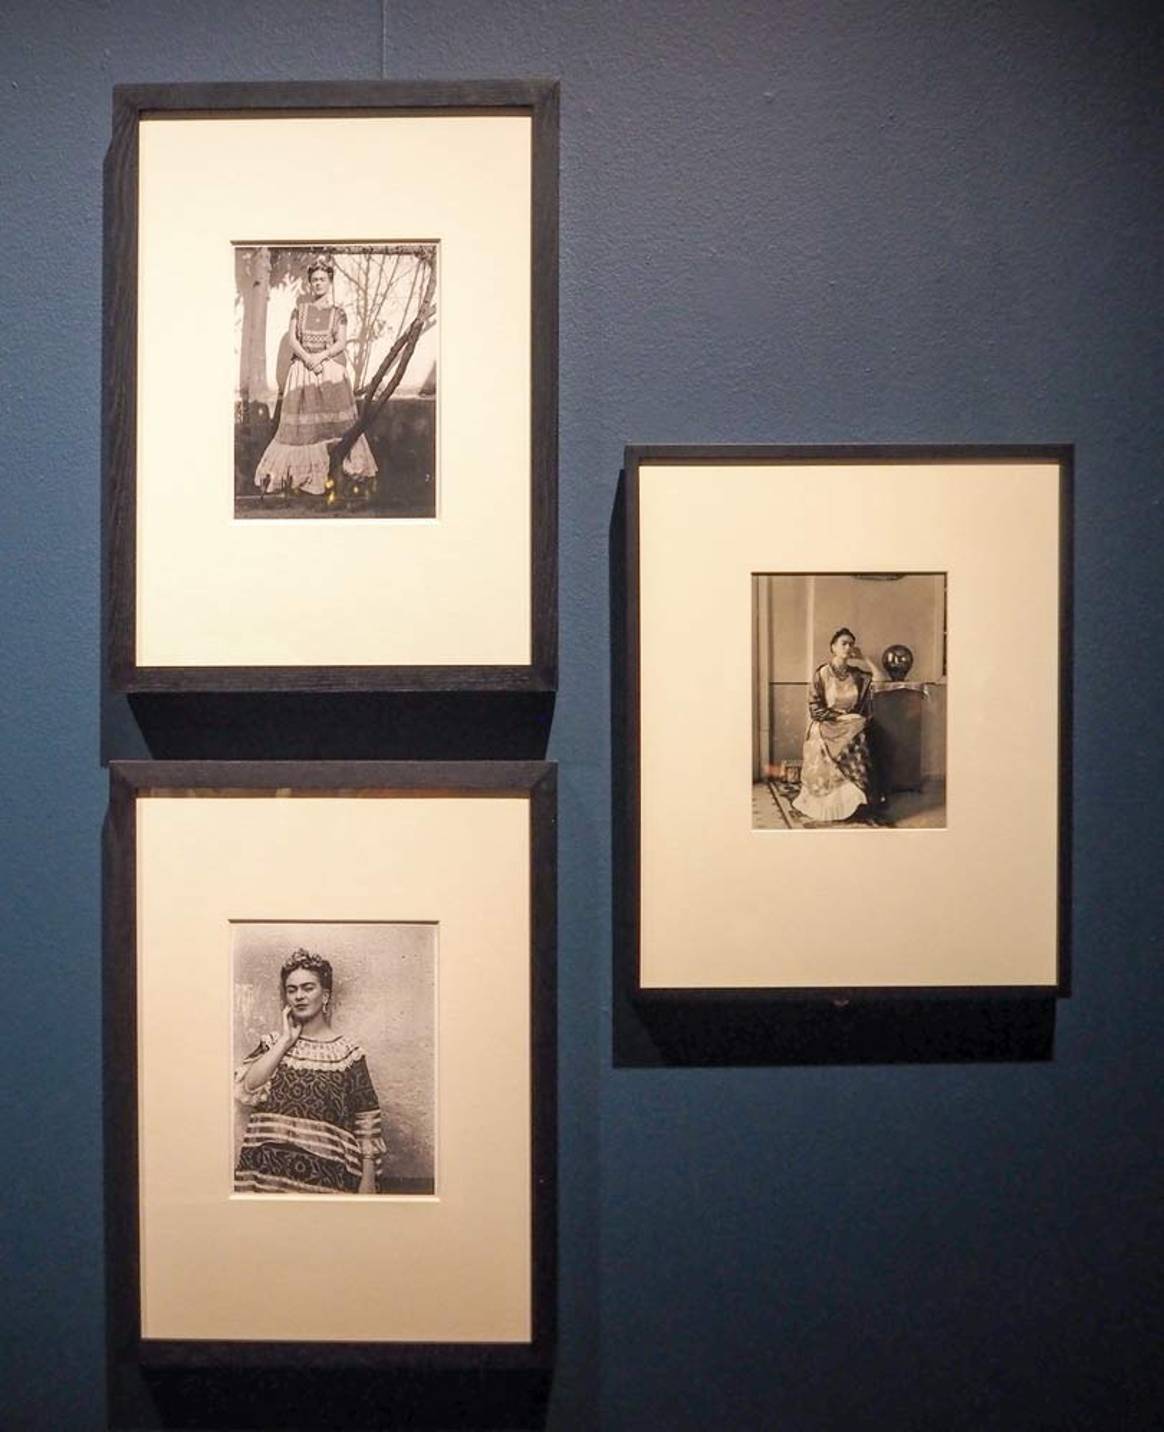 Inside the Frida Kahlo exhibition at the V&A